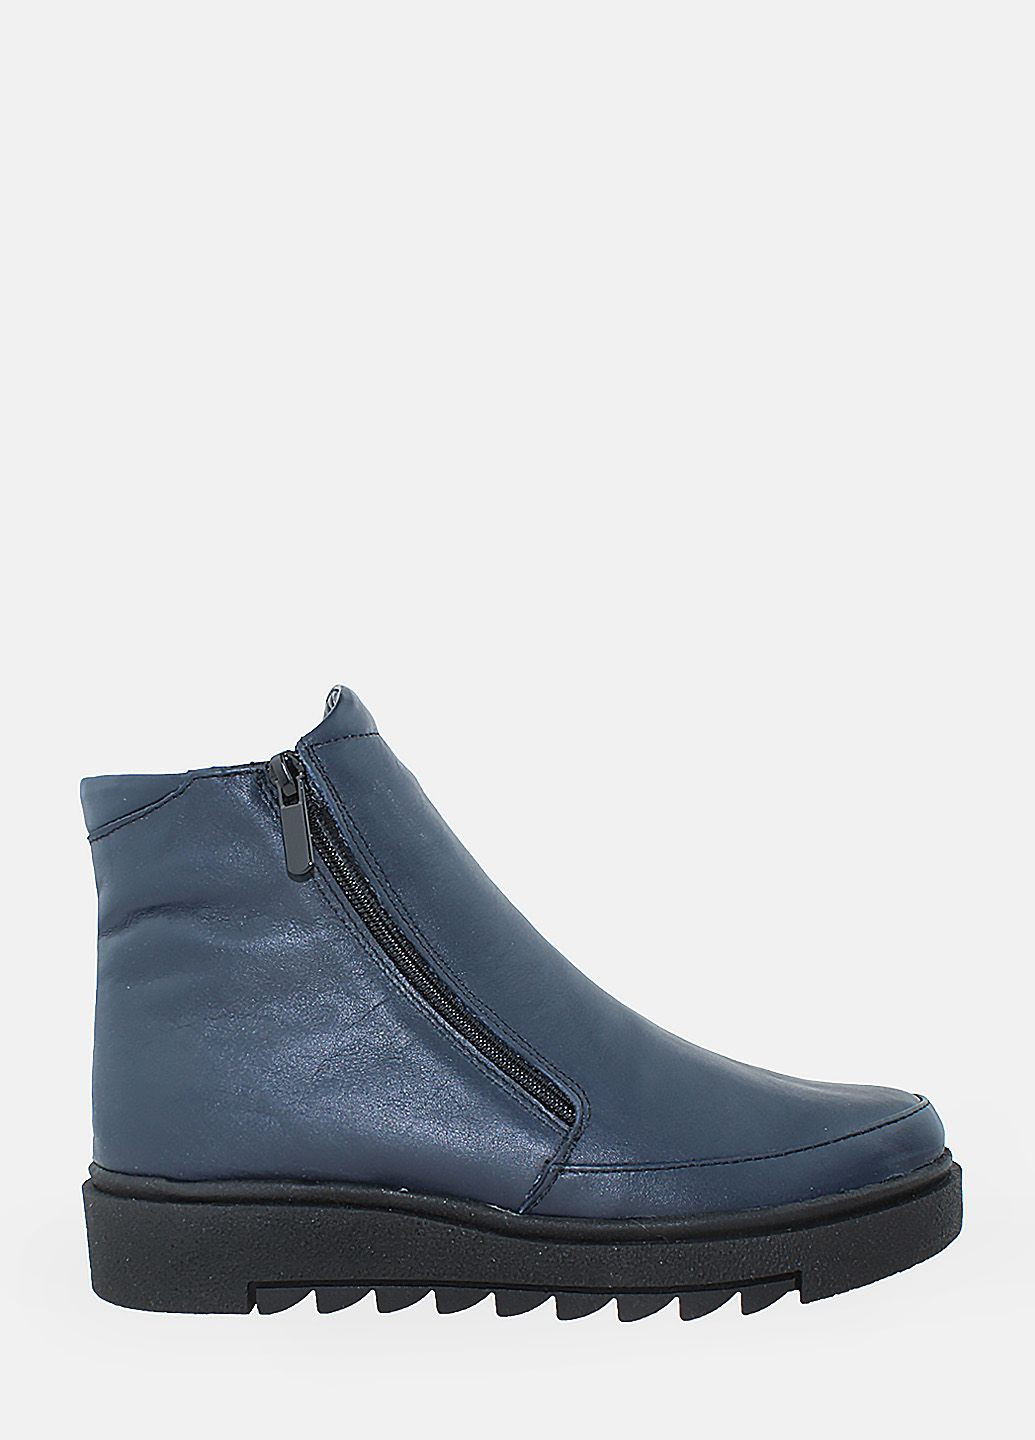 Зимние ботинки r932-1 синий Saurini